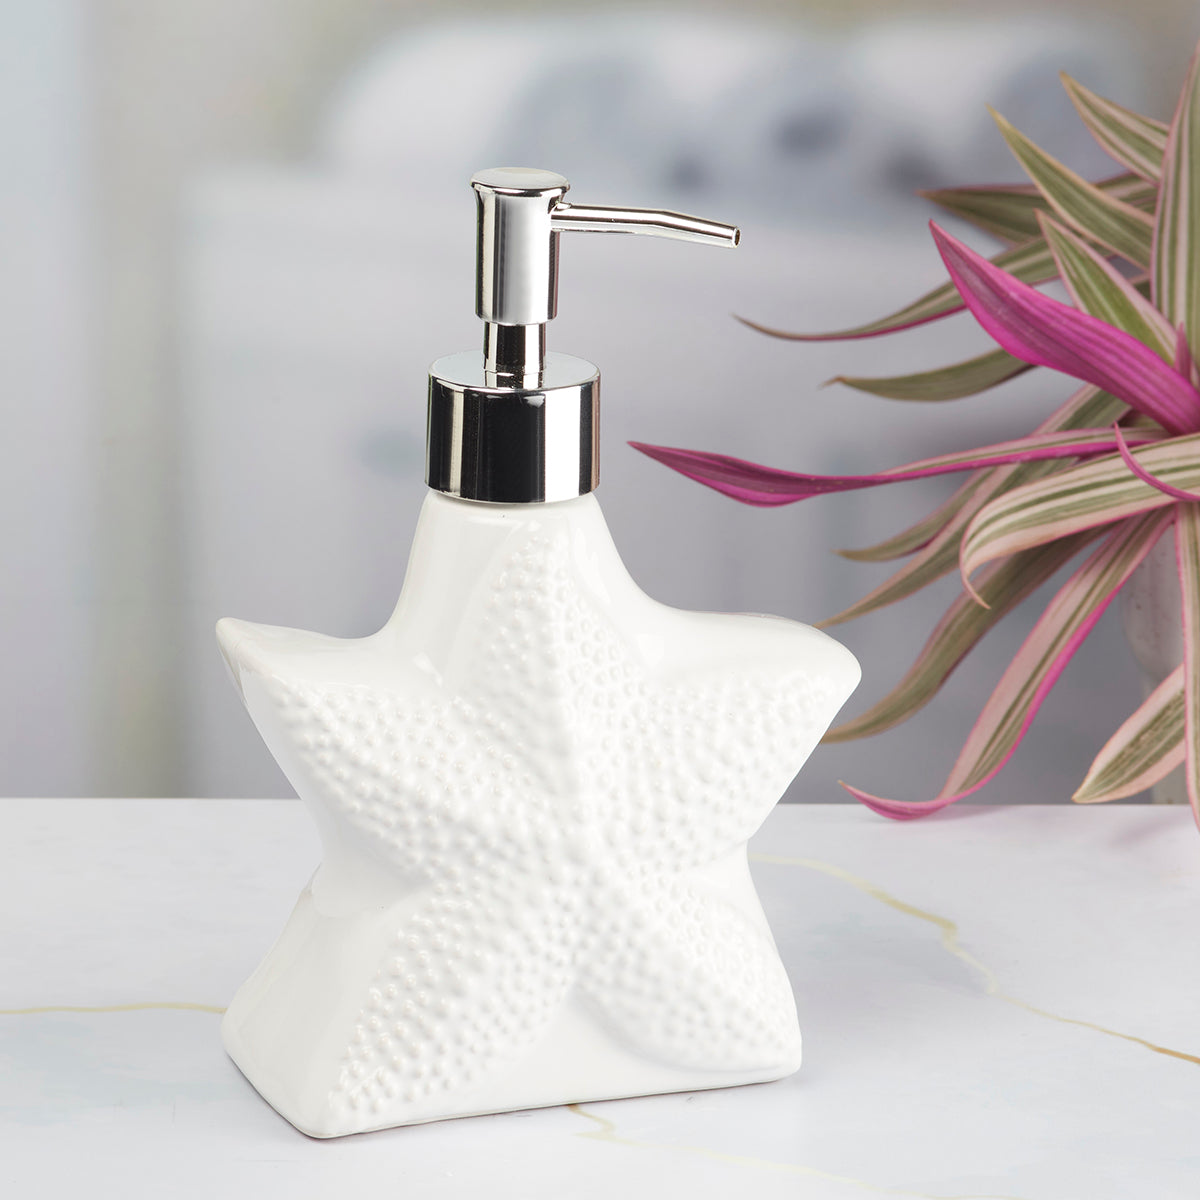 Ceramic Soap Dispenser handwash Pump for Bathroom, Set of 1, White (8465)